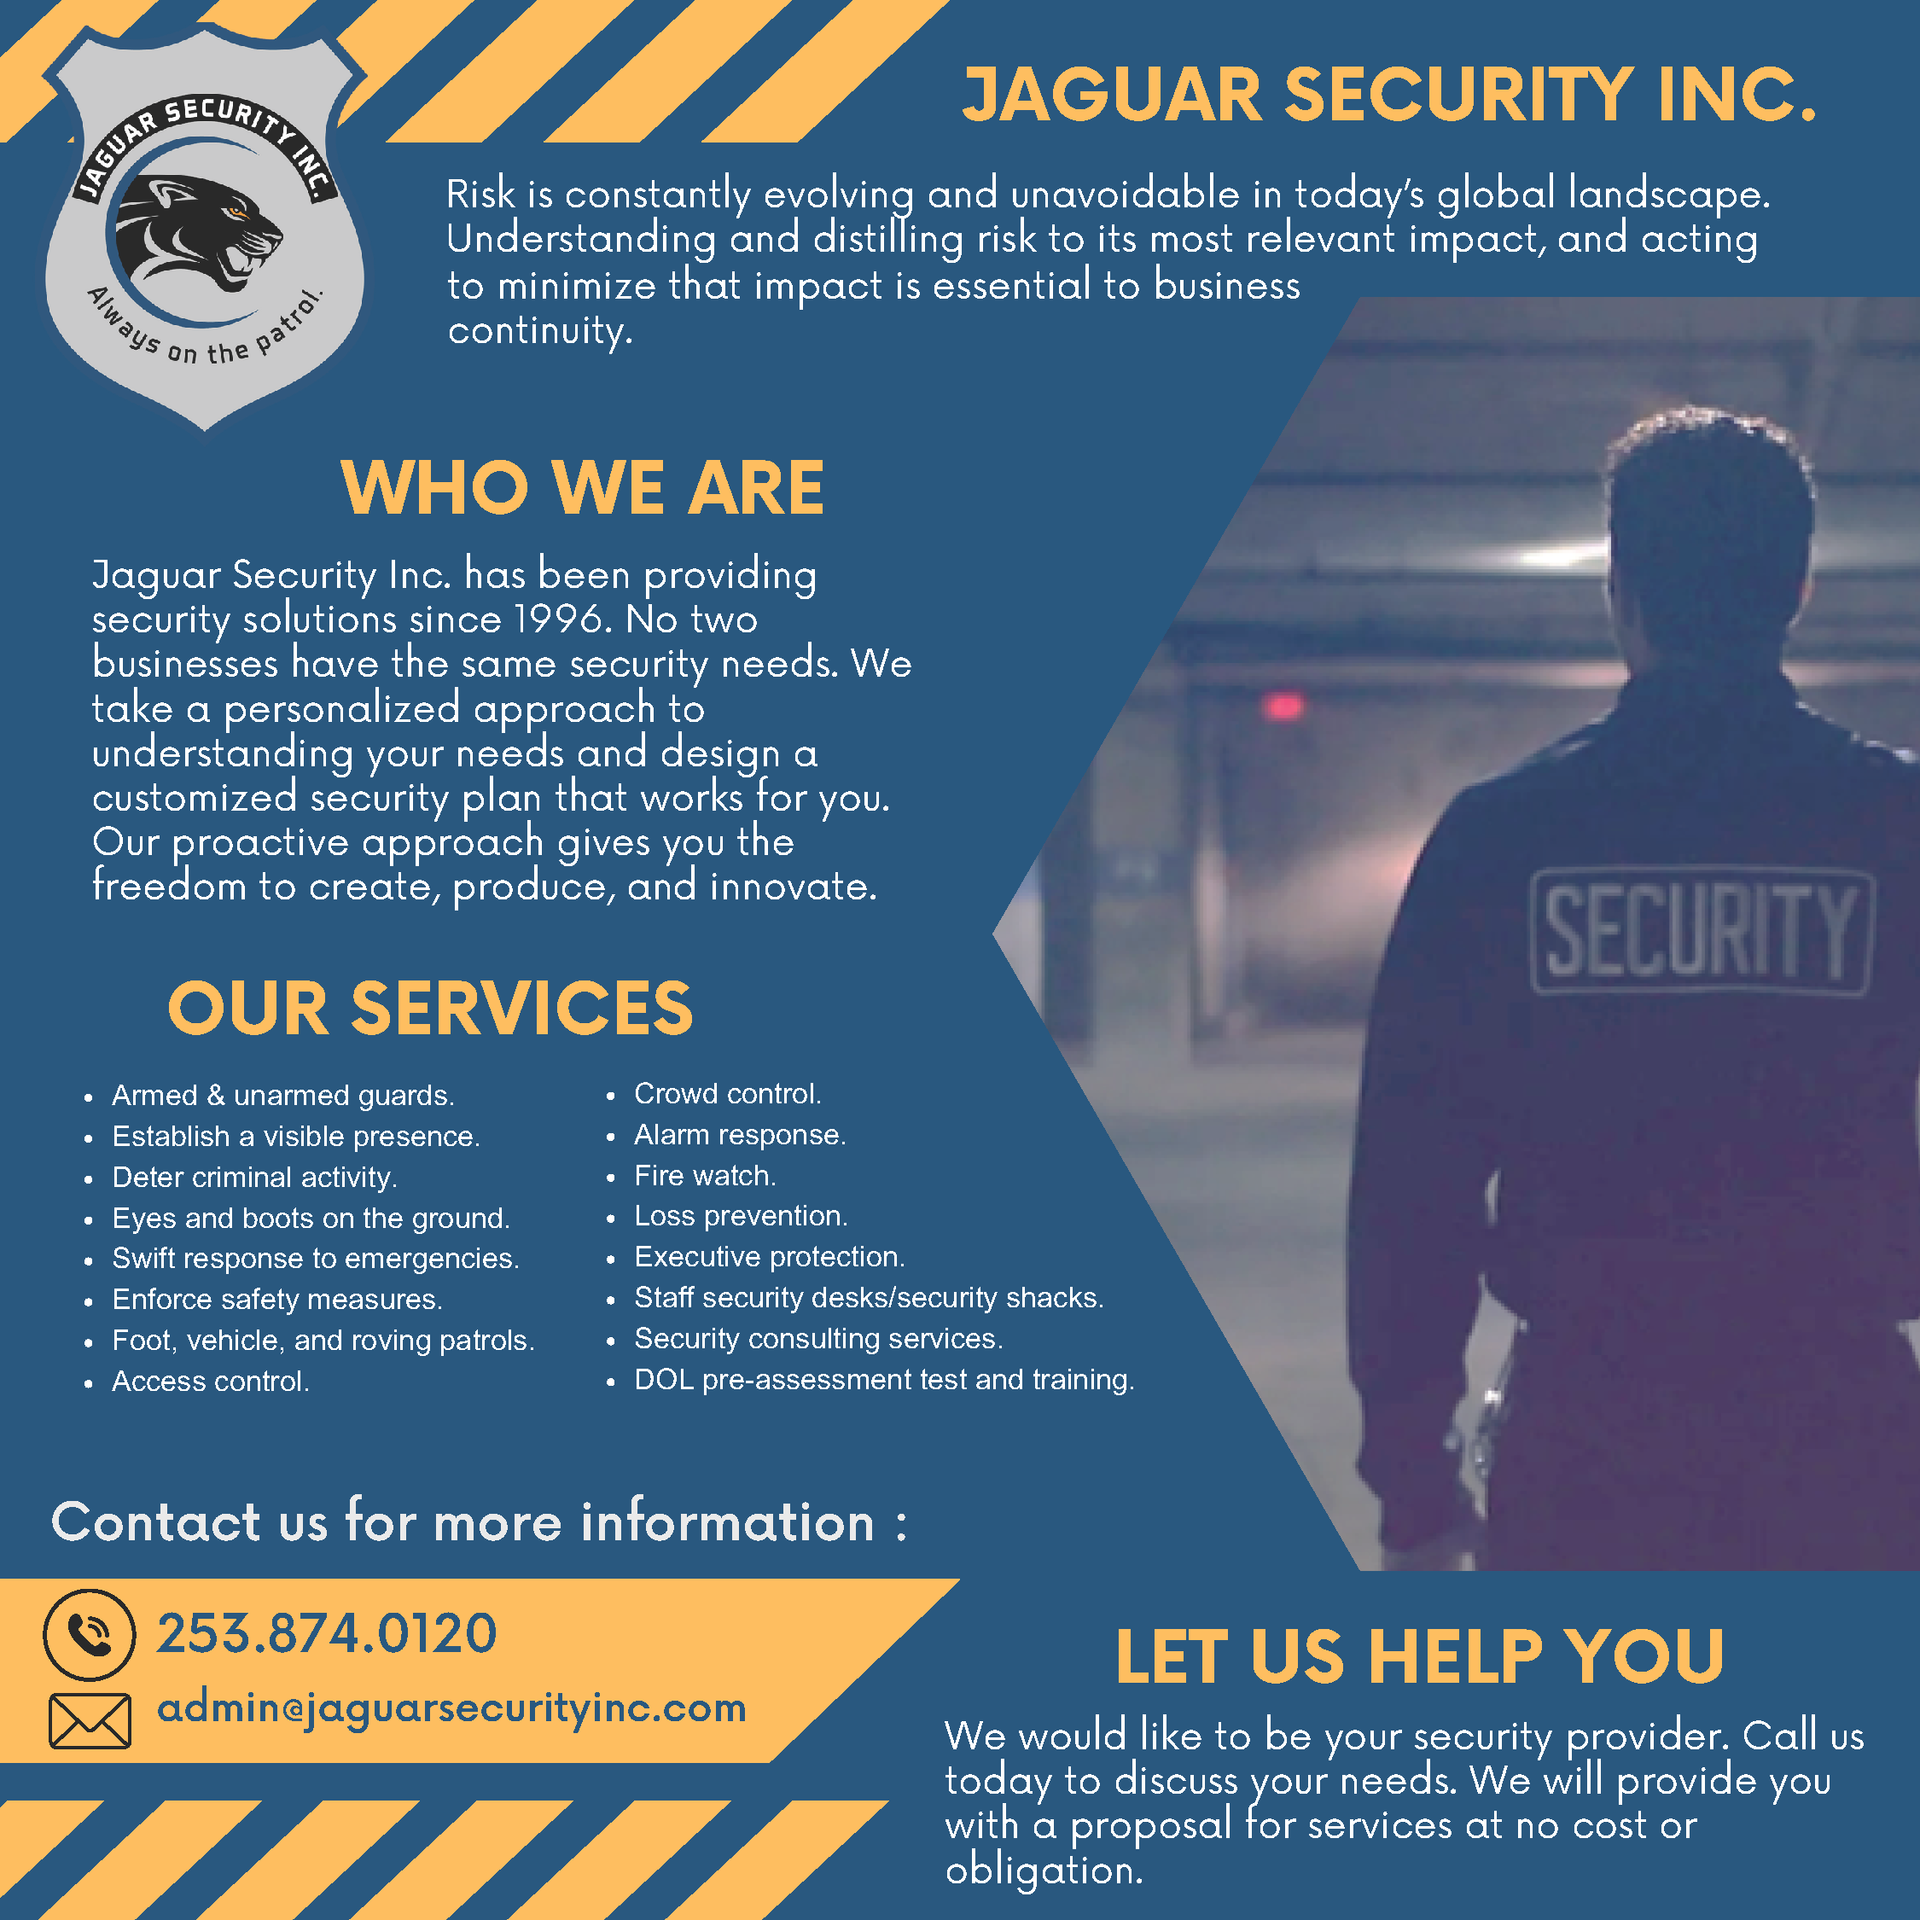 Jaguar Security Inc. has been providing security solutions since 1996